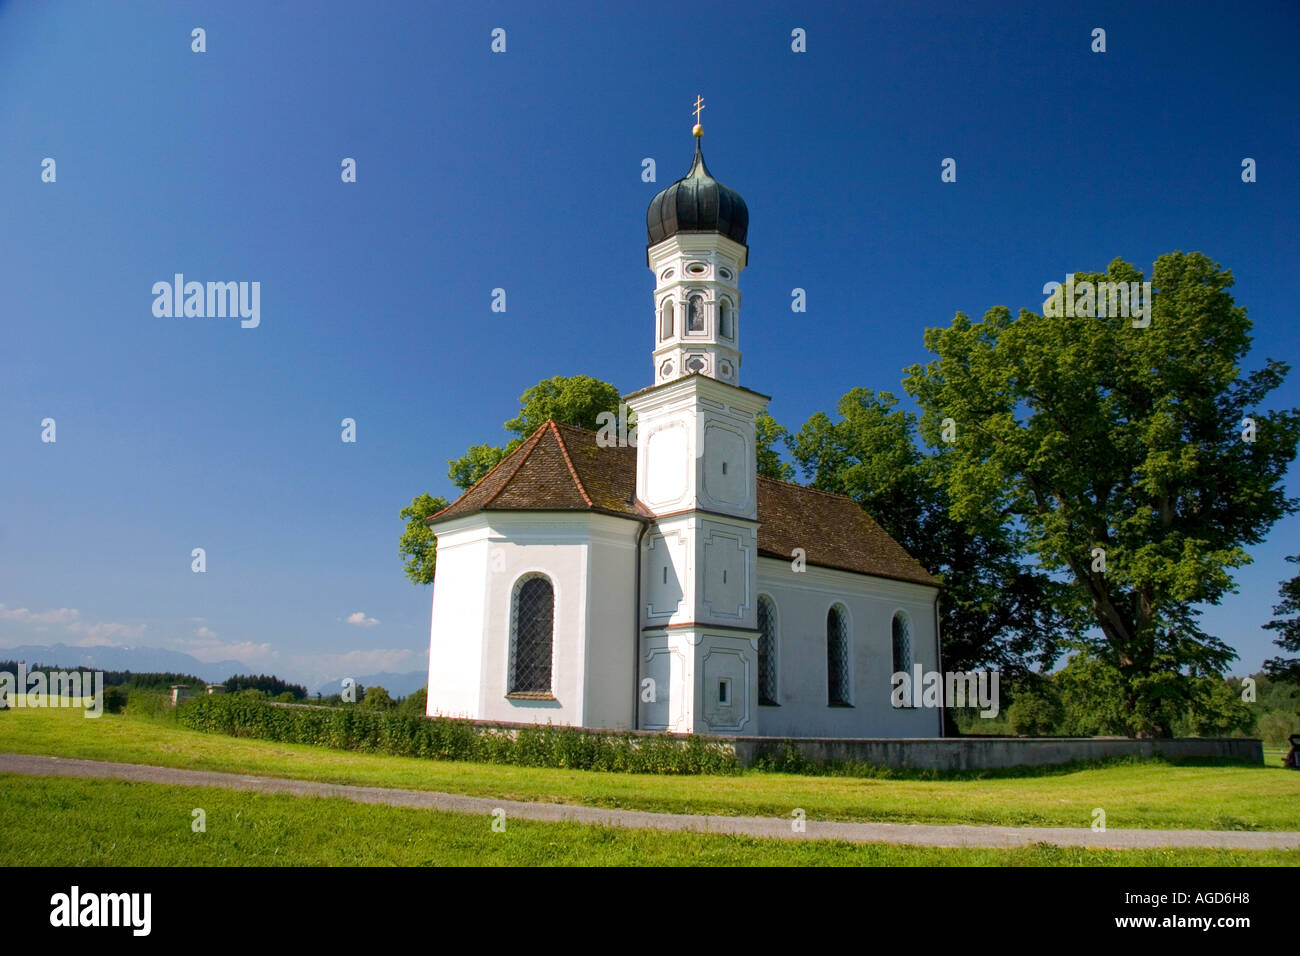 A church near Weilheim in Southern Germany. Stock Photo